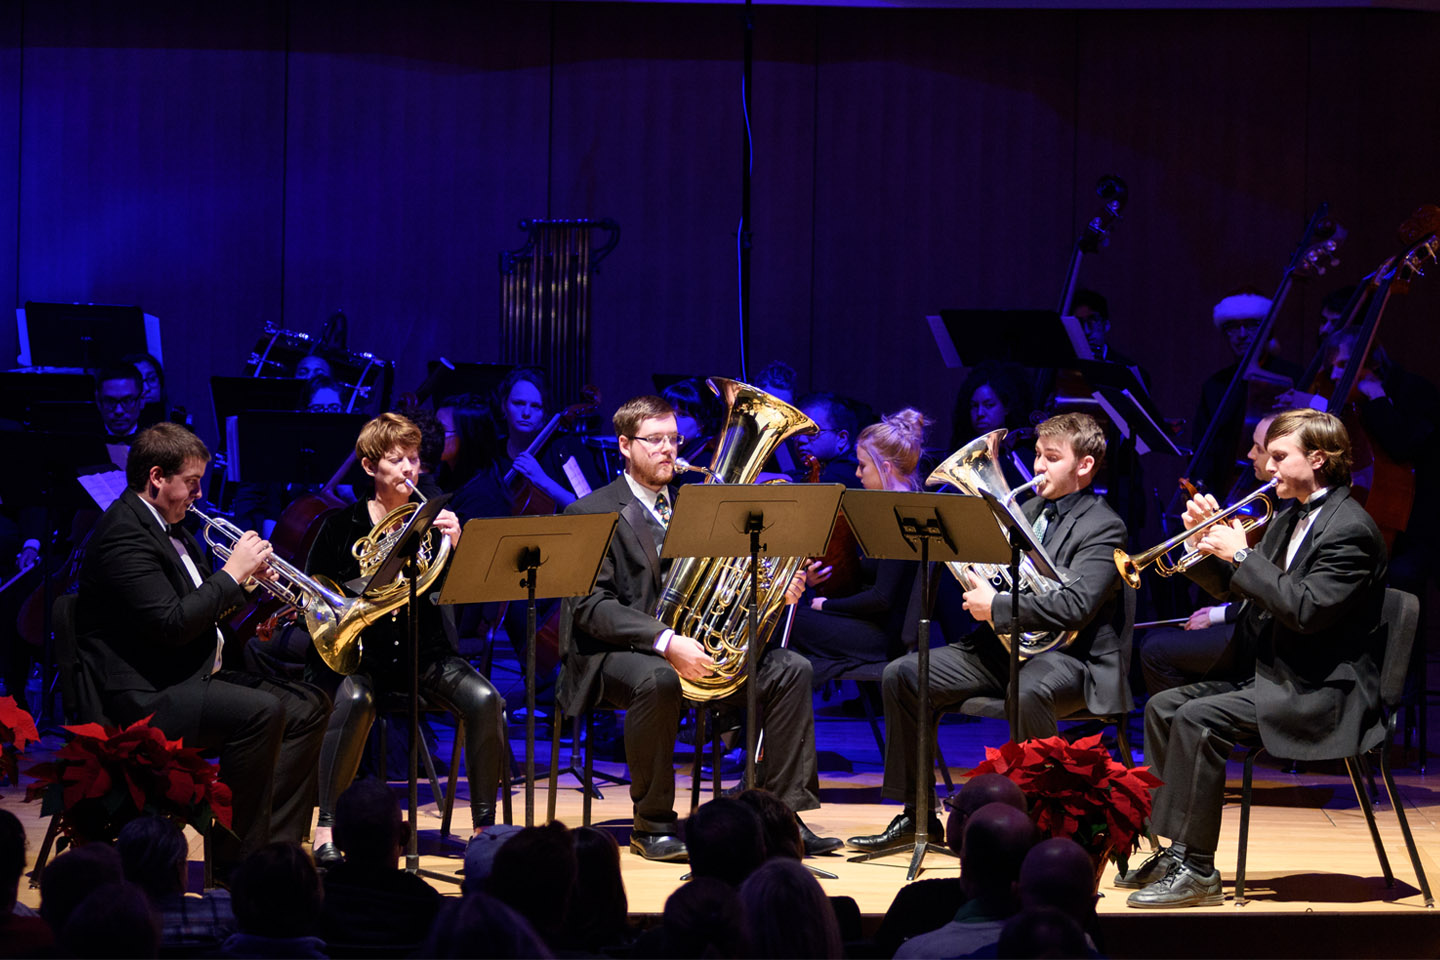 Horn Quintet performing under blue lights in the King Center Concert Hall